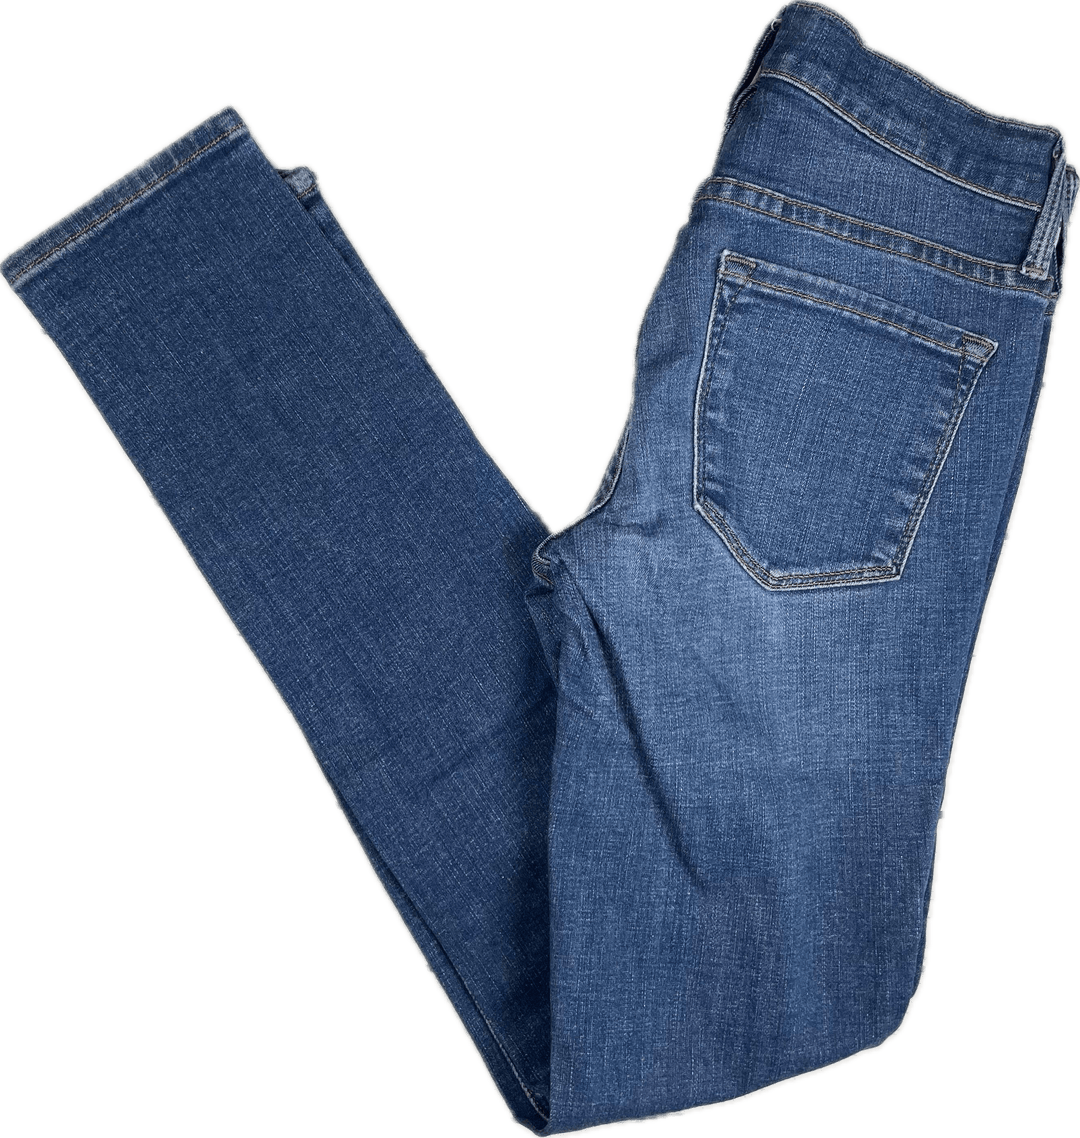 Frame Denim 'Le Skinny de Jeanne' Skinny Jeans -Size 24" or 6 AU - Jean Pool